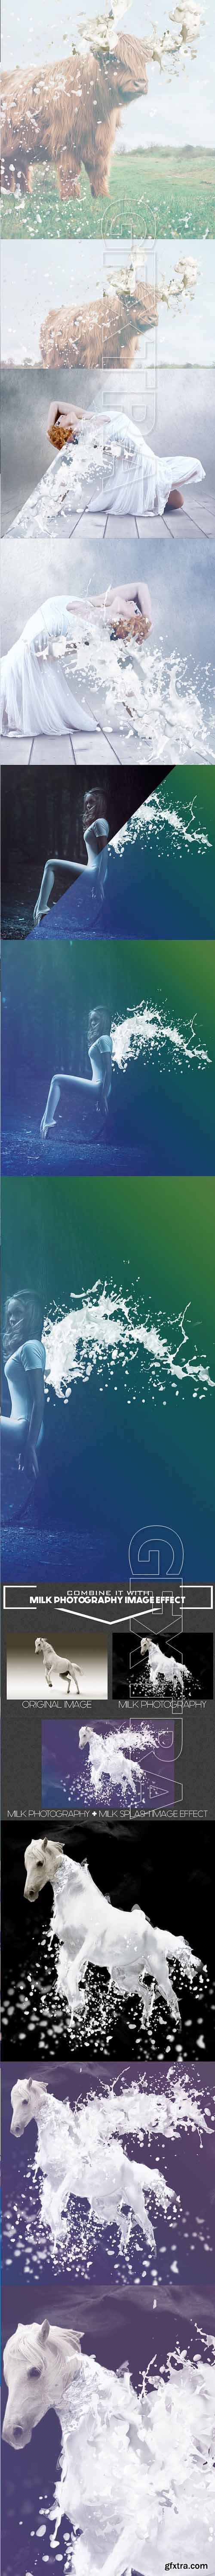 GR - Milk Splash Image Effect 19885380